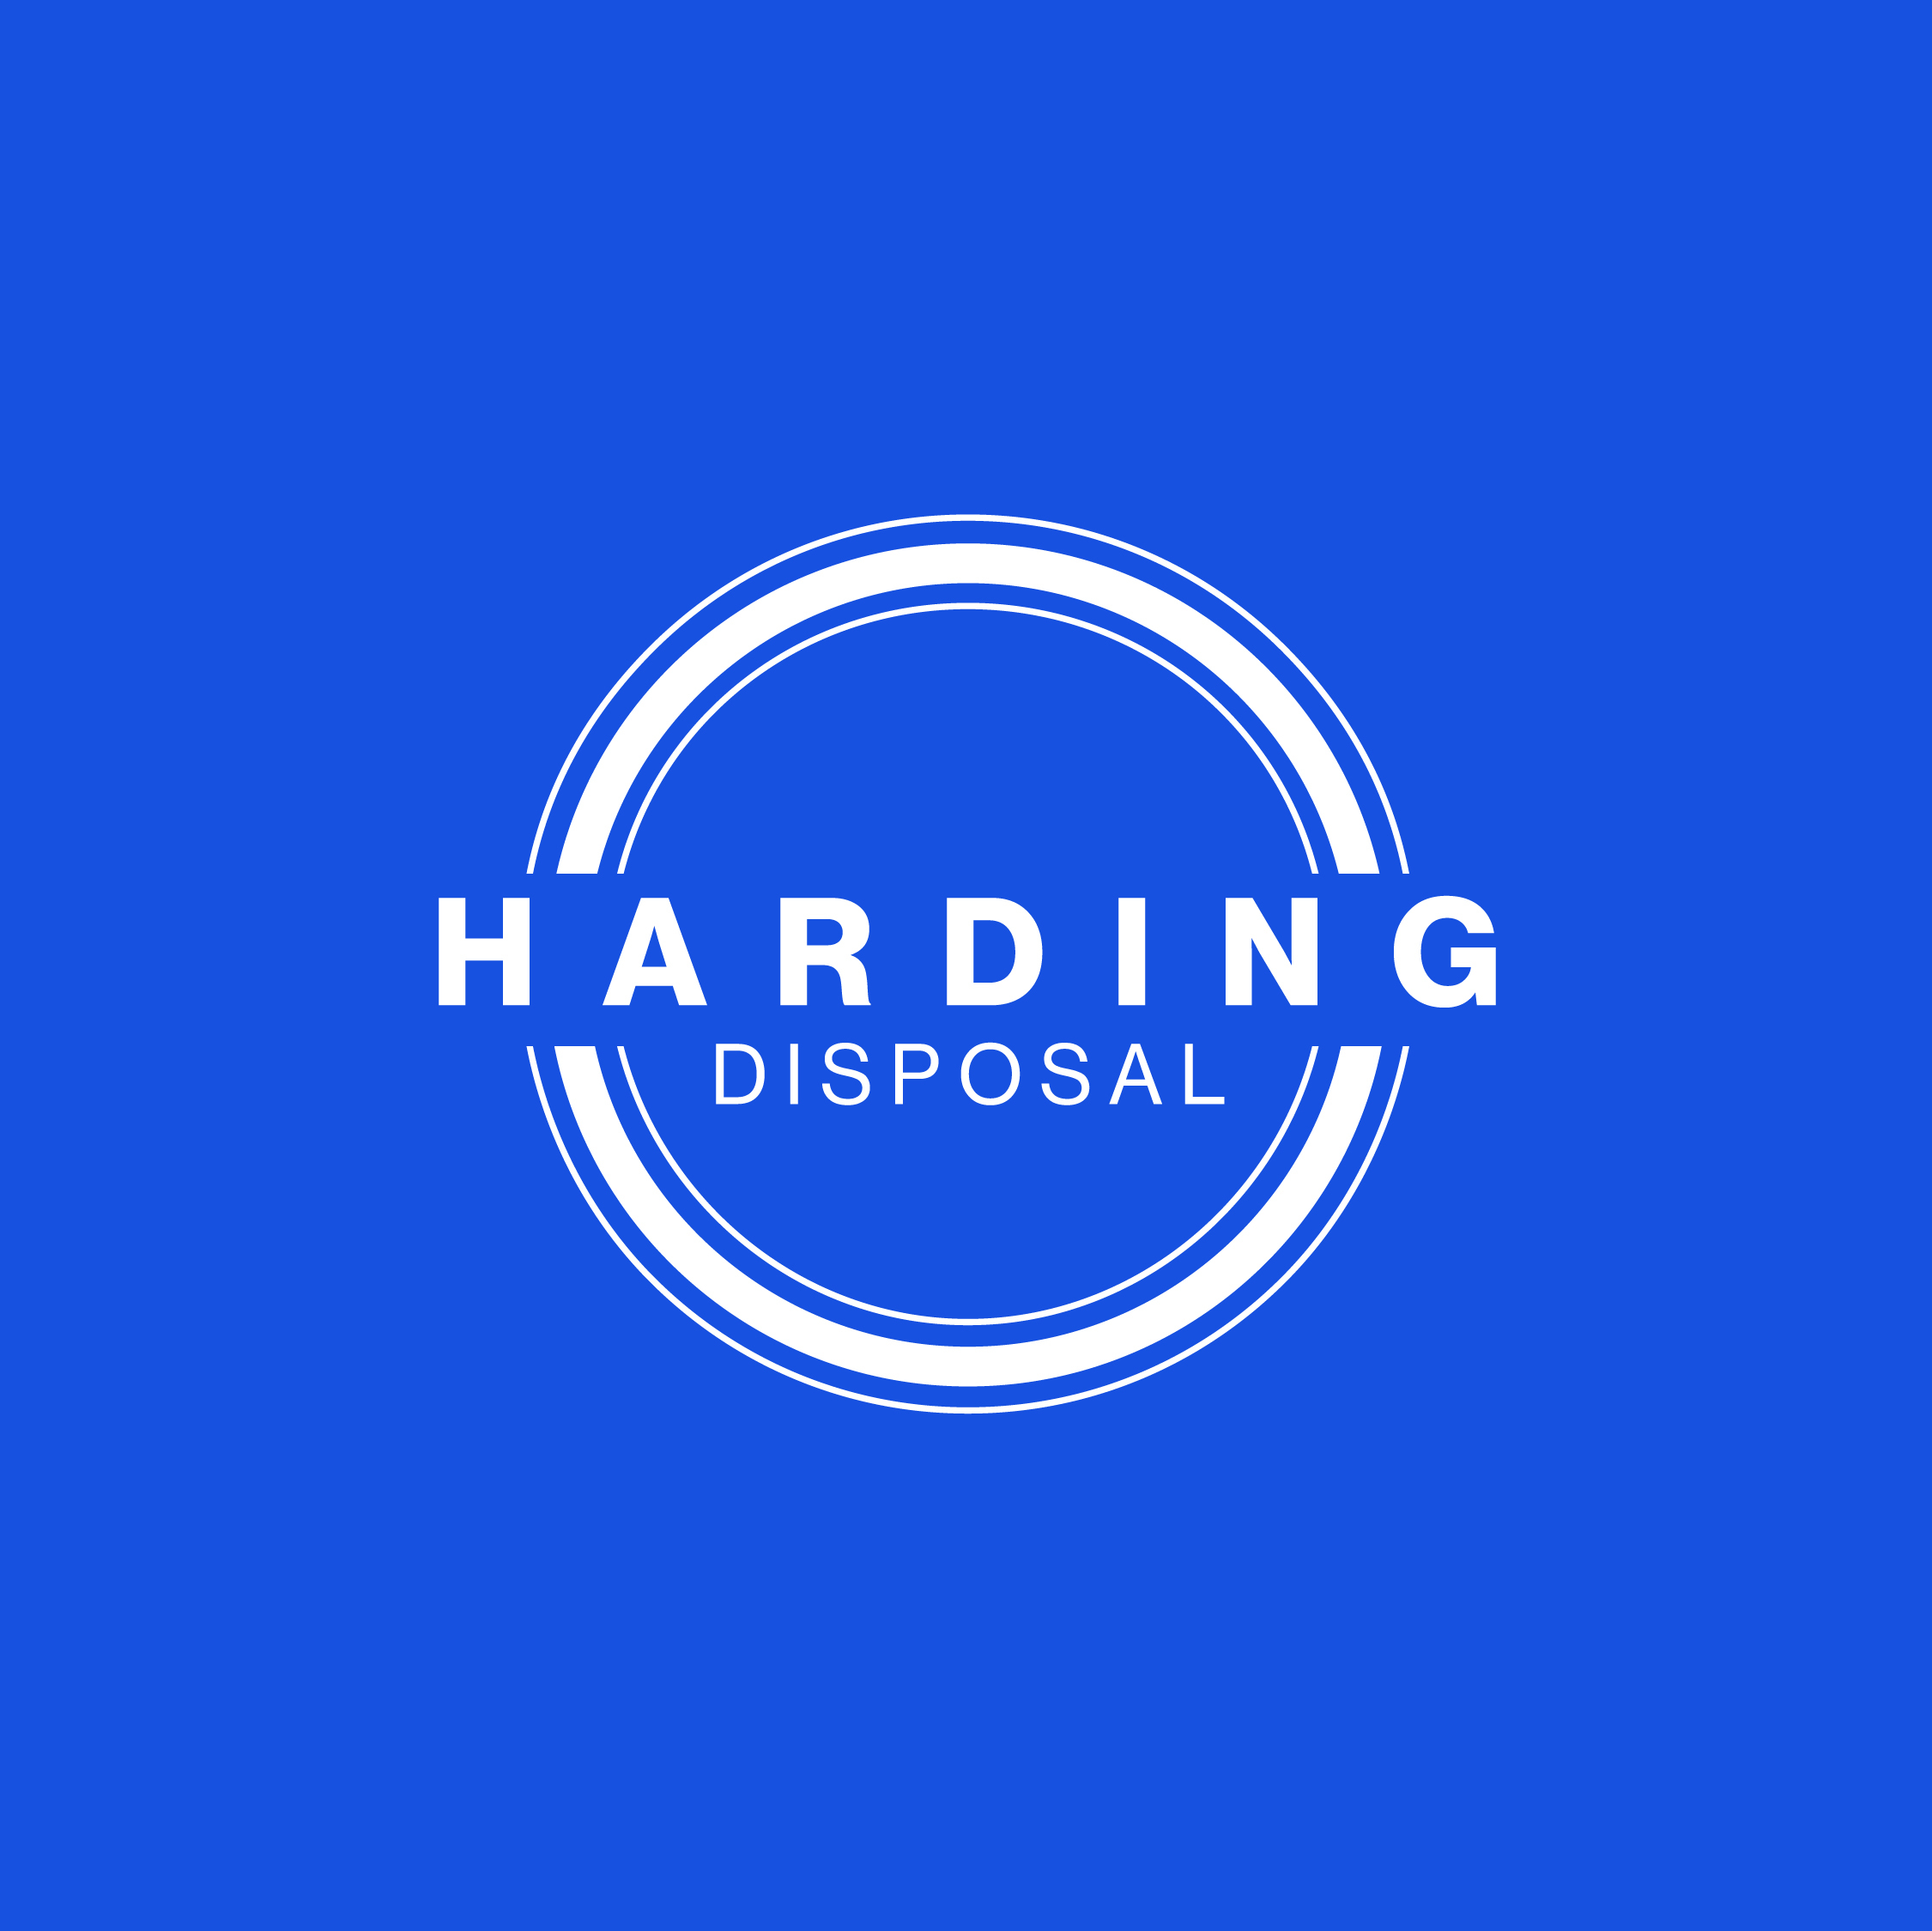 Harding Disposal LTD's logo